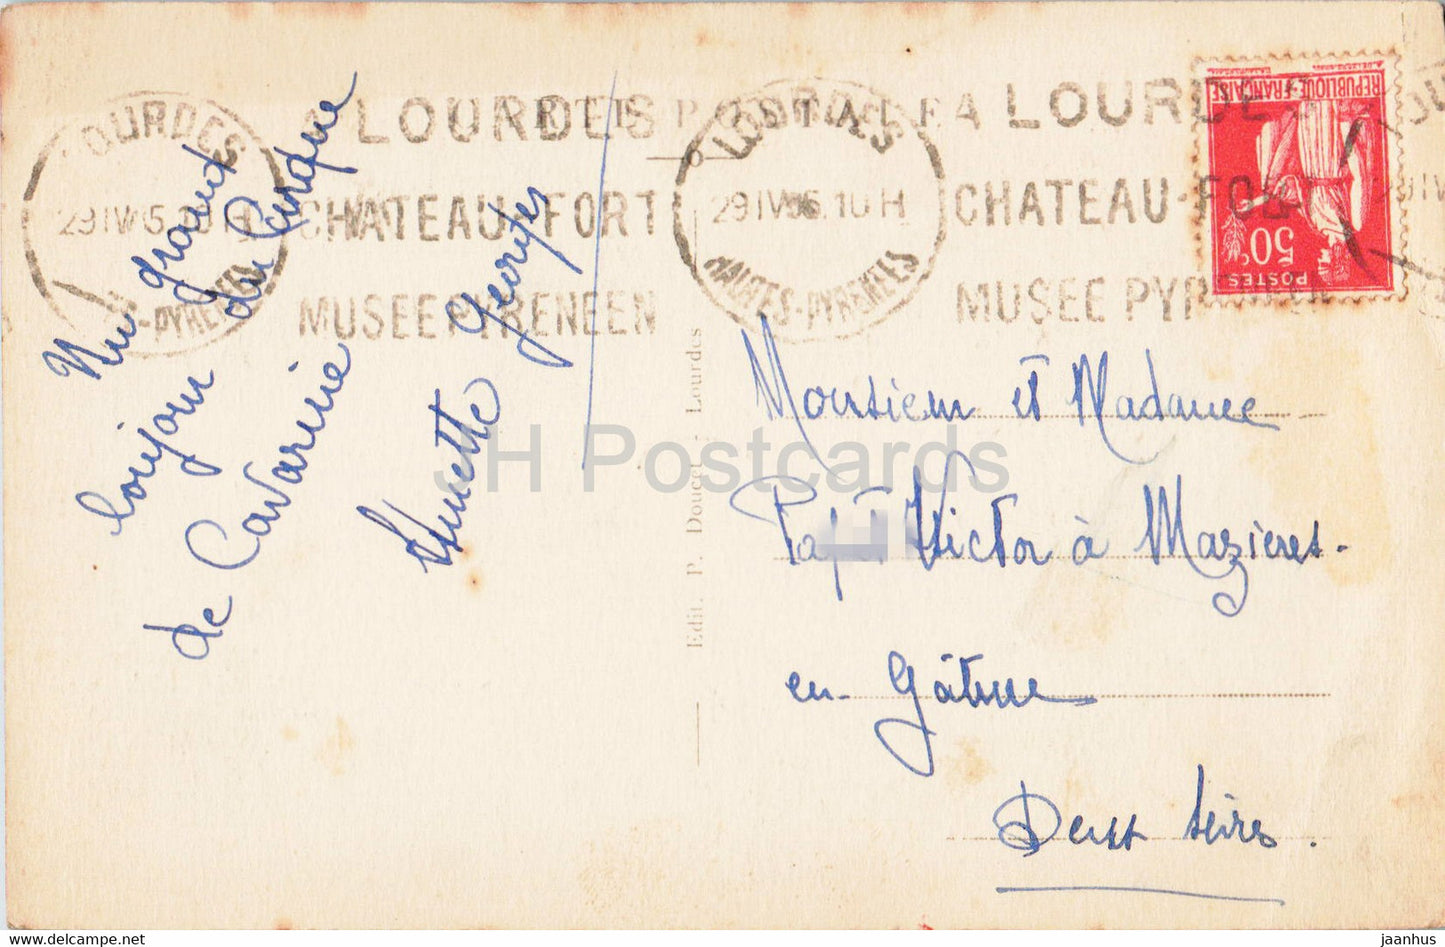 Gavarnie - Le Cirque et la Grande Cascade 422 m - 14 - old postcard - 1936 - France - used